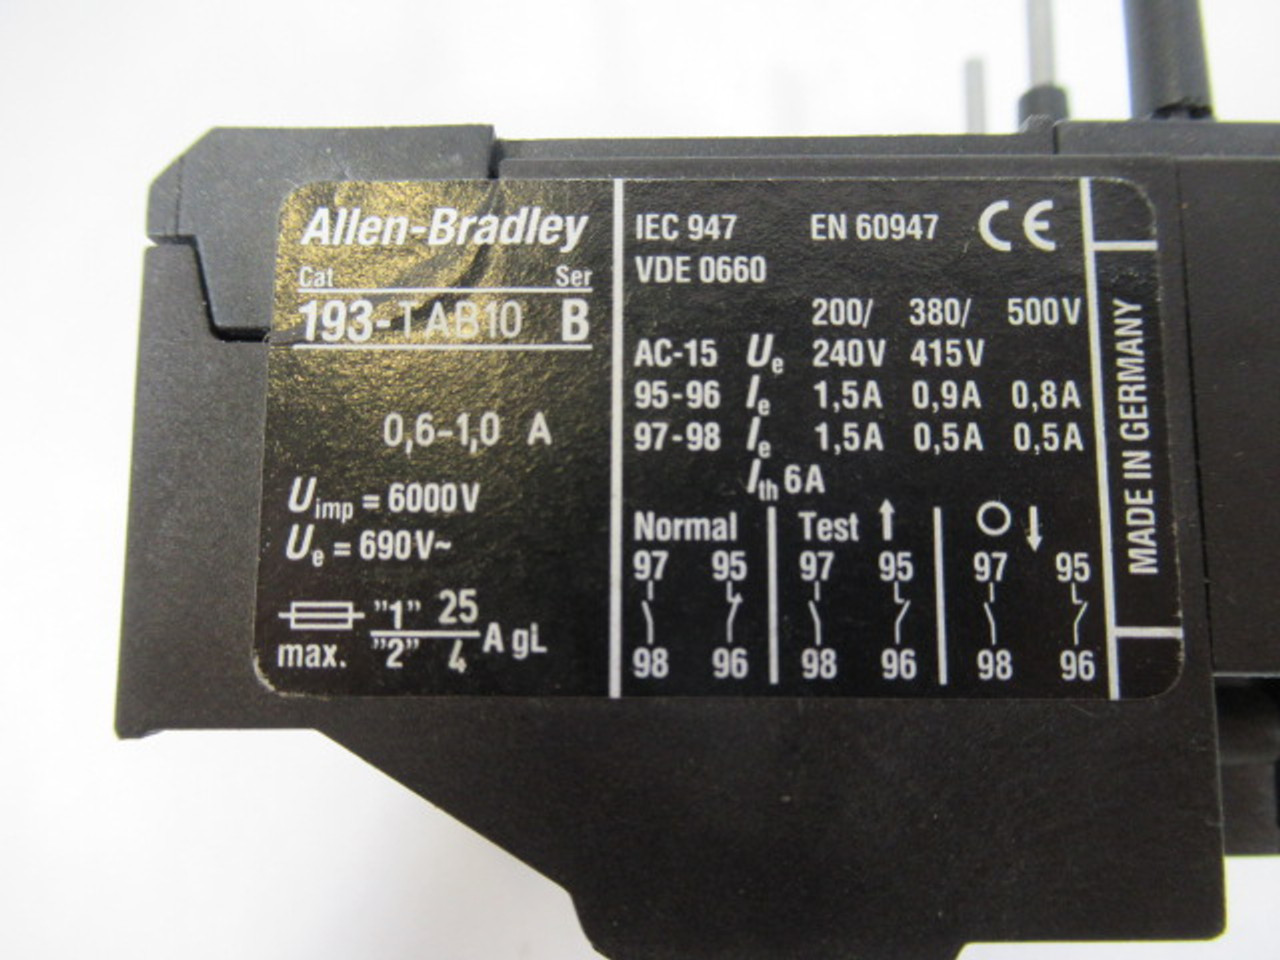 Allen-Bradley 193-TAB10 Series B Overload Relay 0.6-1.0A 690V USED